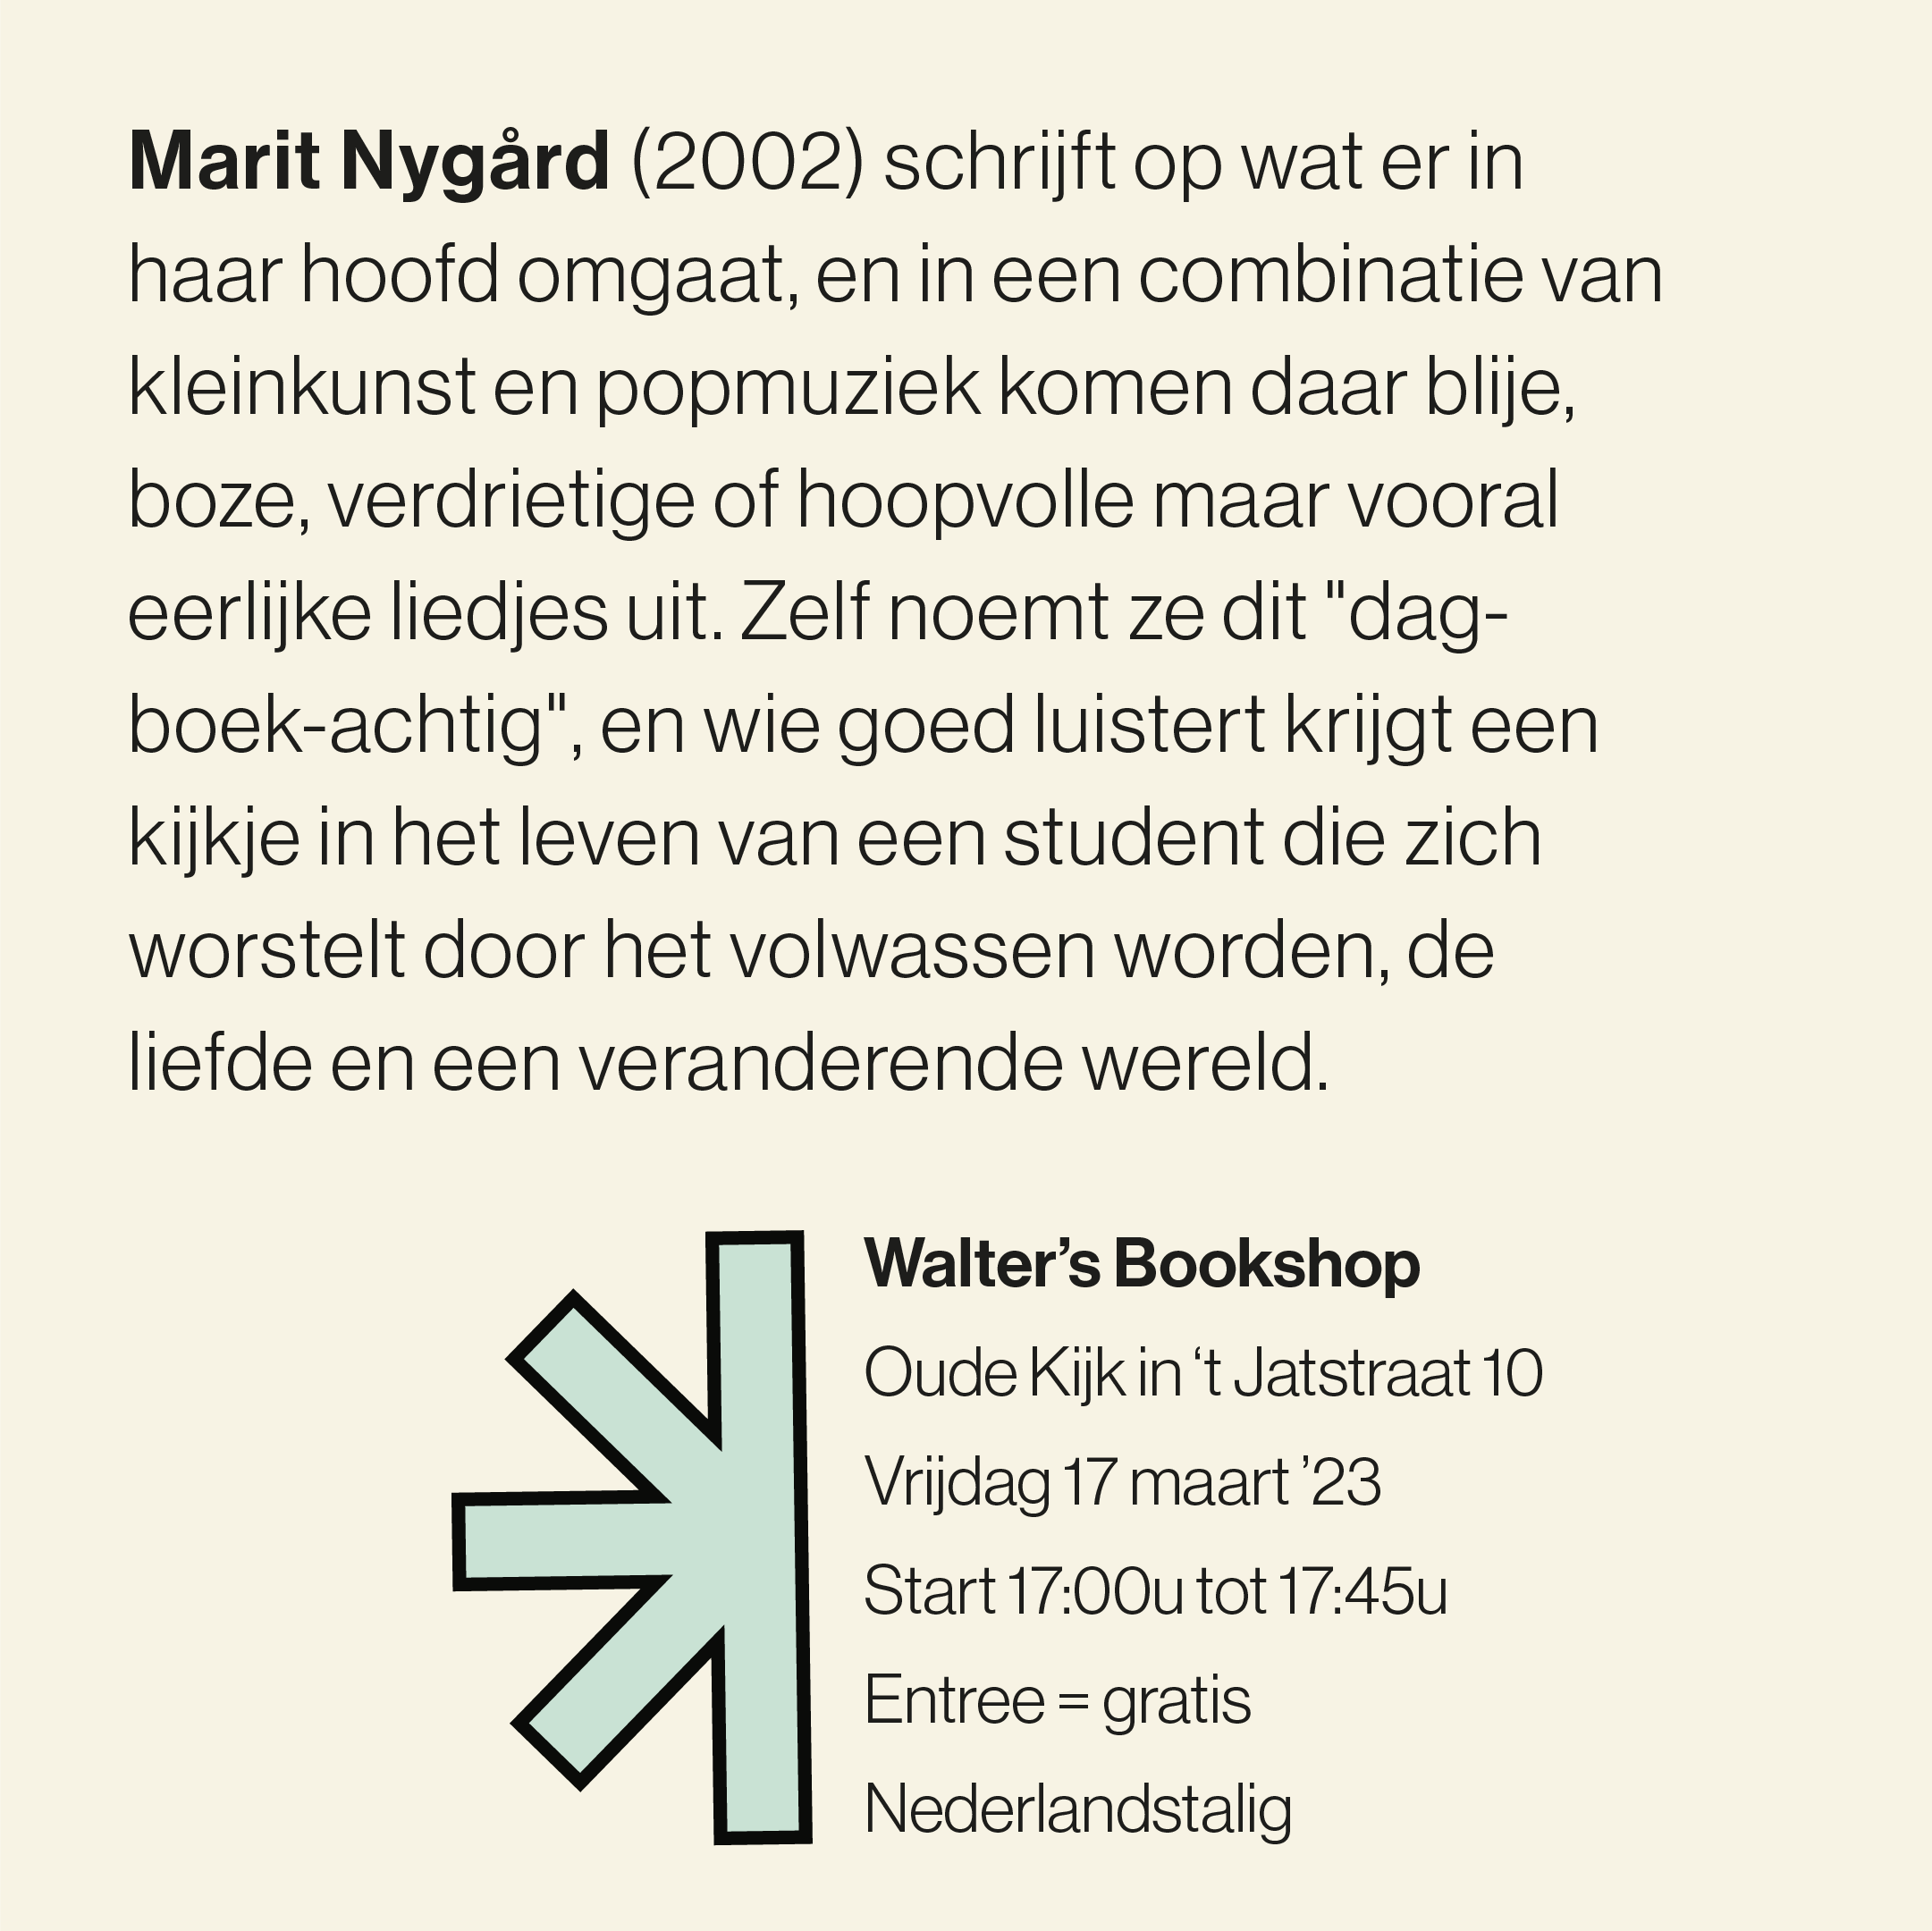 Marit Nygård - Walter's Bookshop Groningen